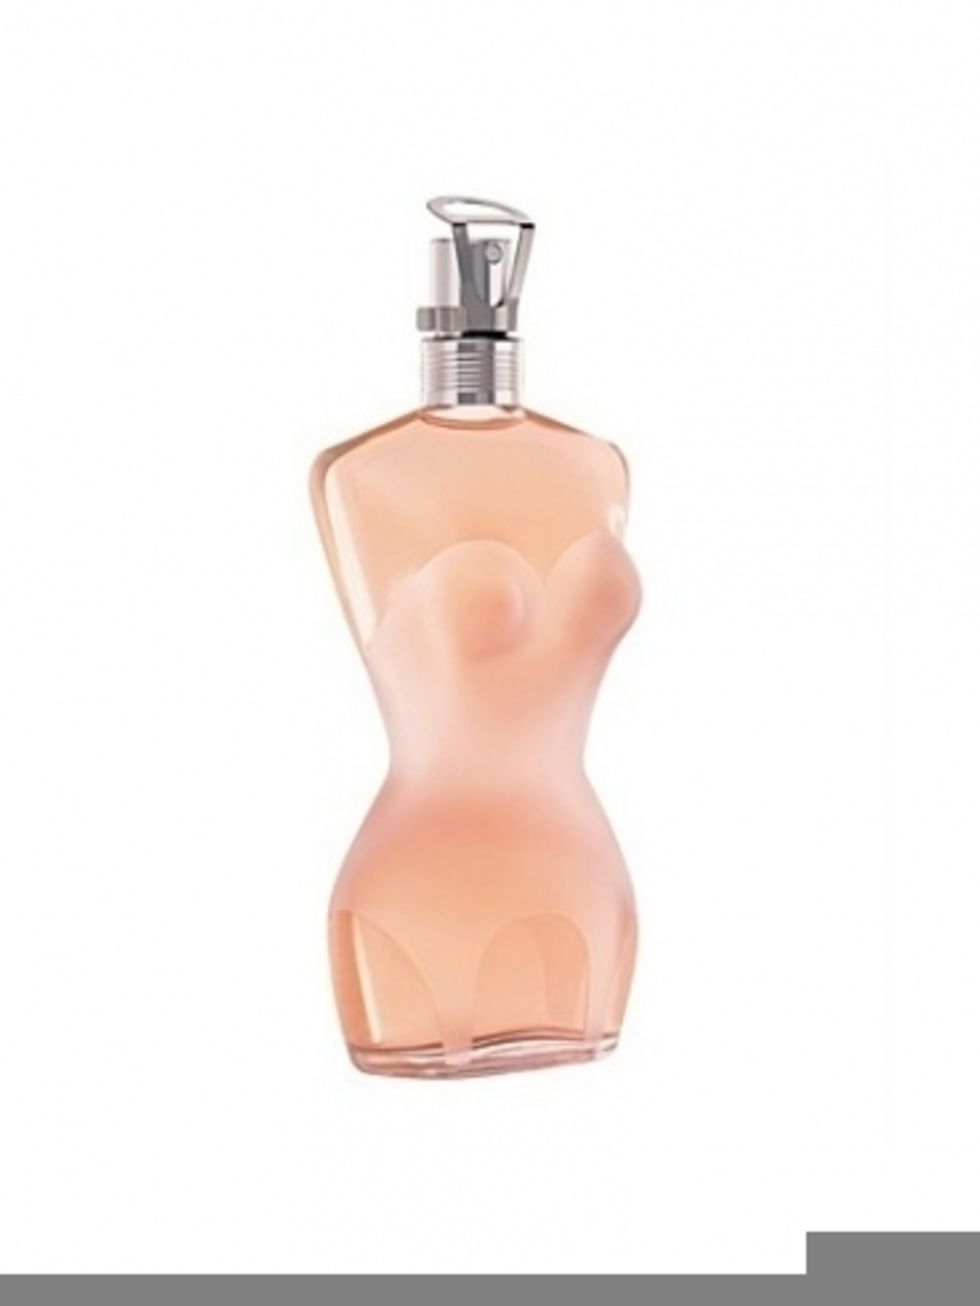 Liquid, Bottle, Peach, Perfume, Amber, Orange, Glass, Glass bottle, Transparent material, Plastic, 